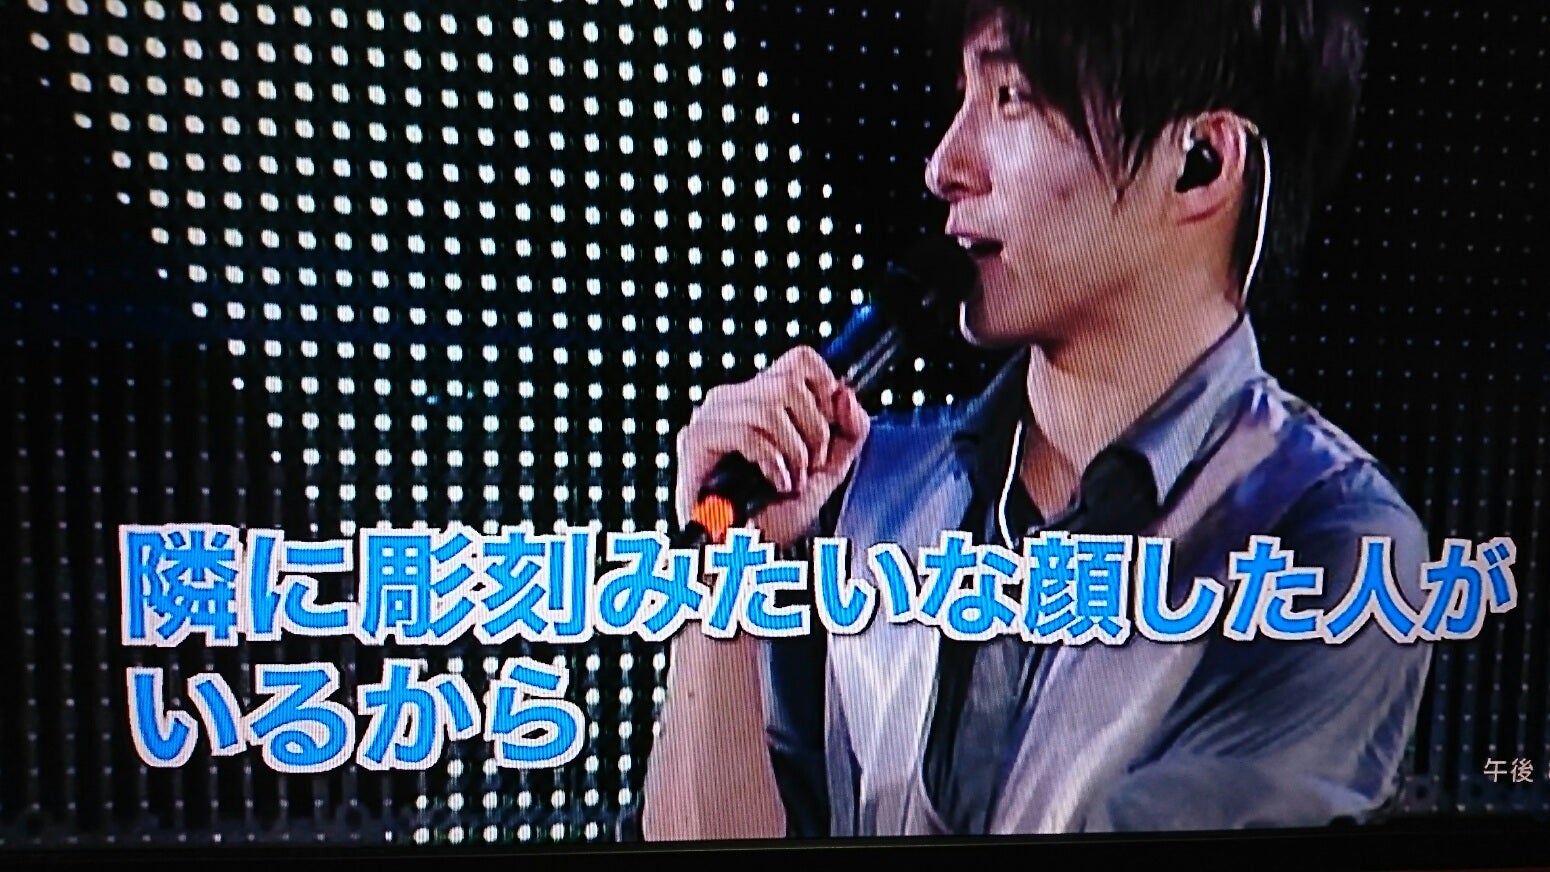 Ｖ６・LIVE TOUR 2008 VIBES鑑賞 Disc１～３～岡田くんを見る目が 